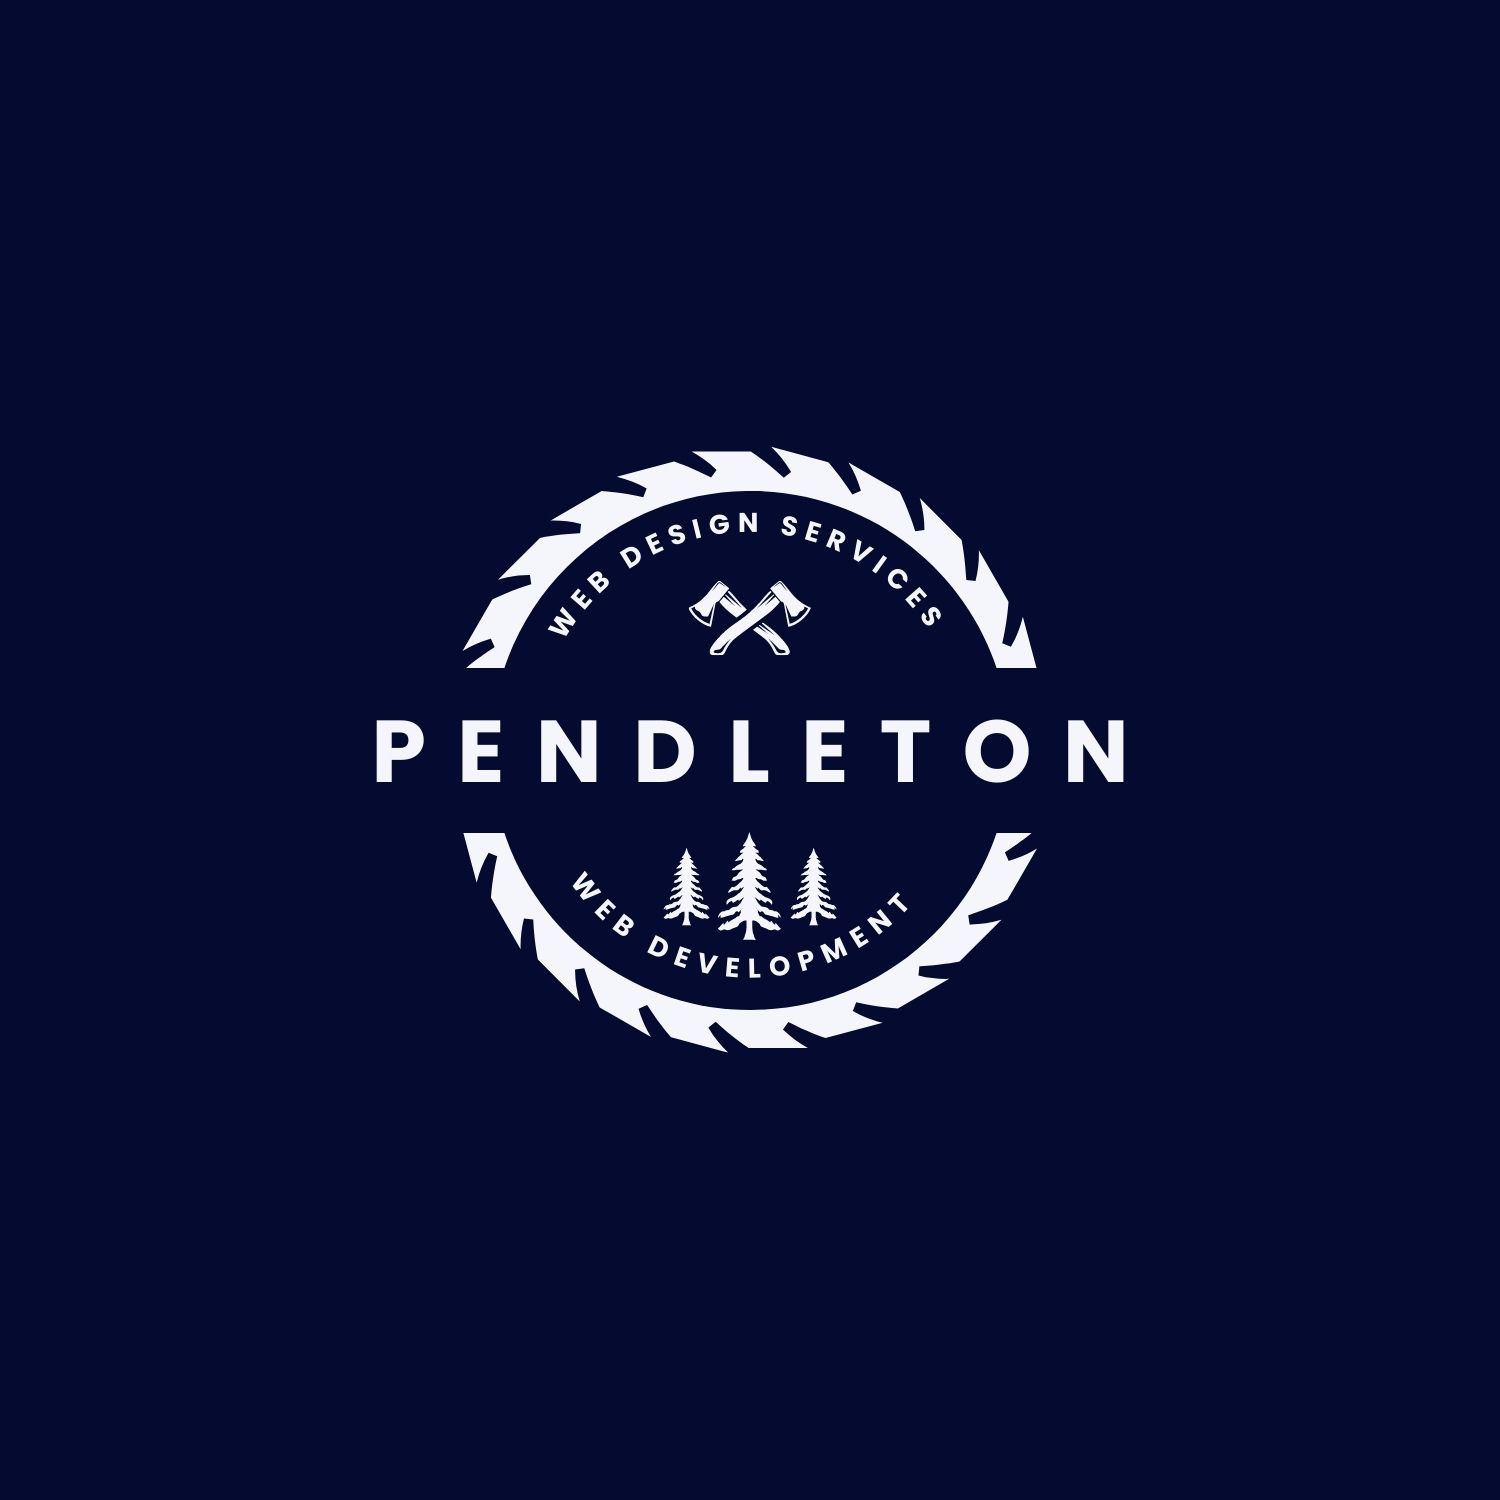 Pendleton web design logo